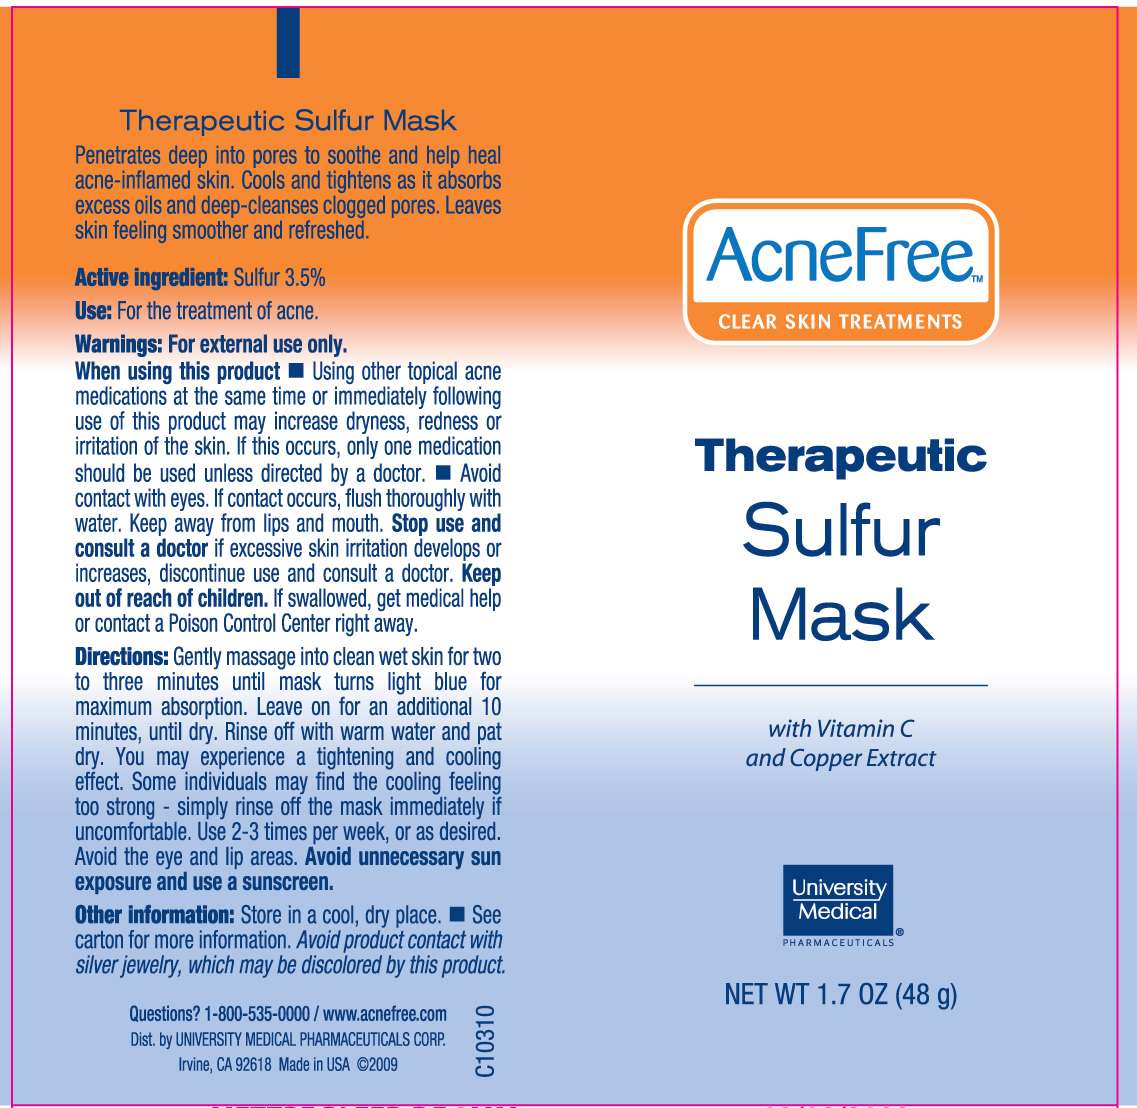 Therapeutic Sulfur Mask